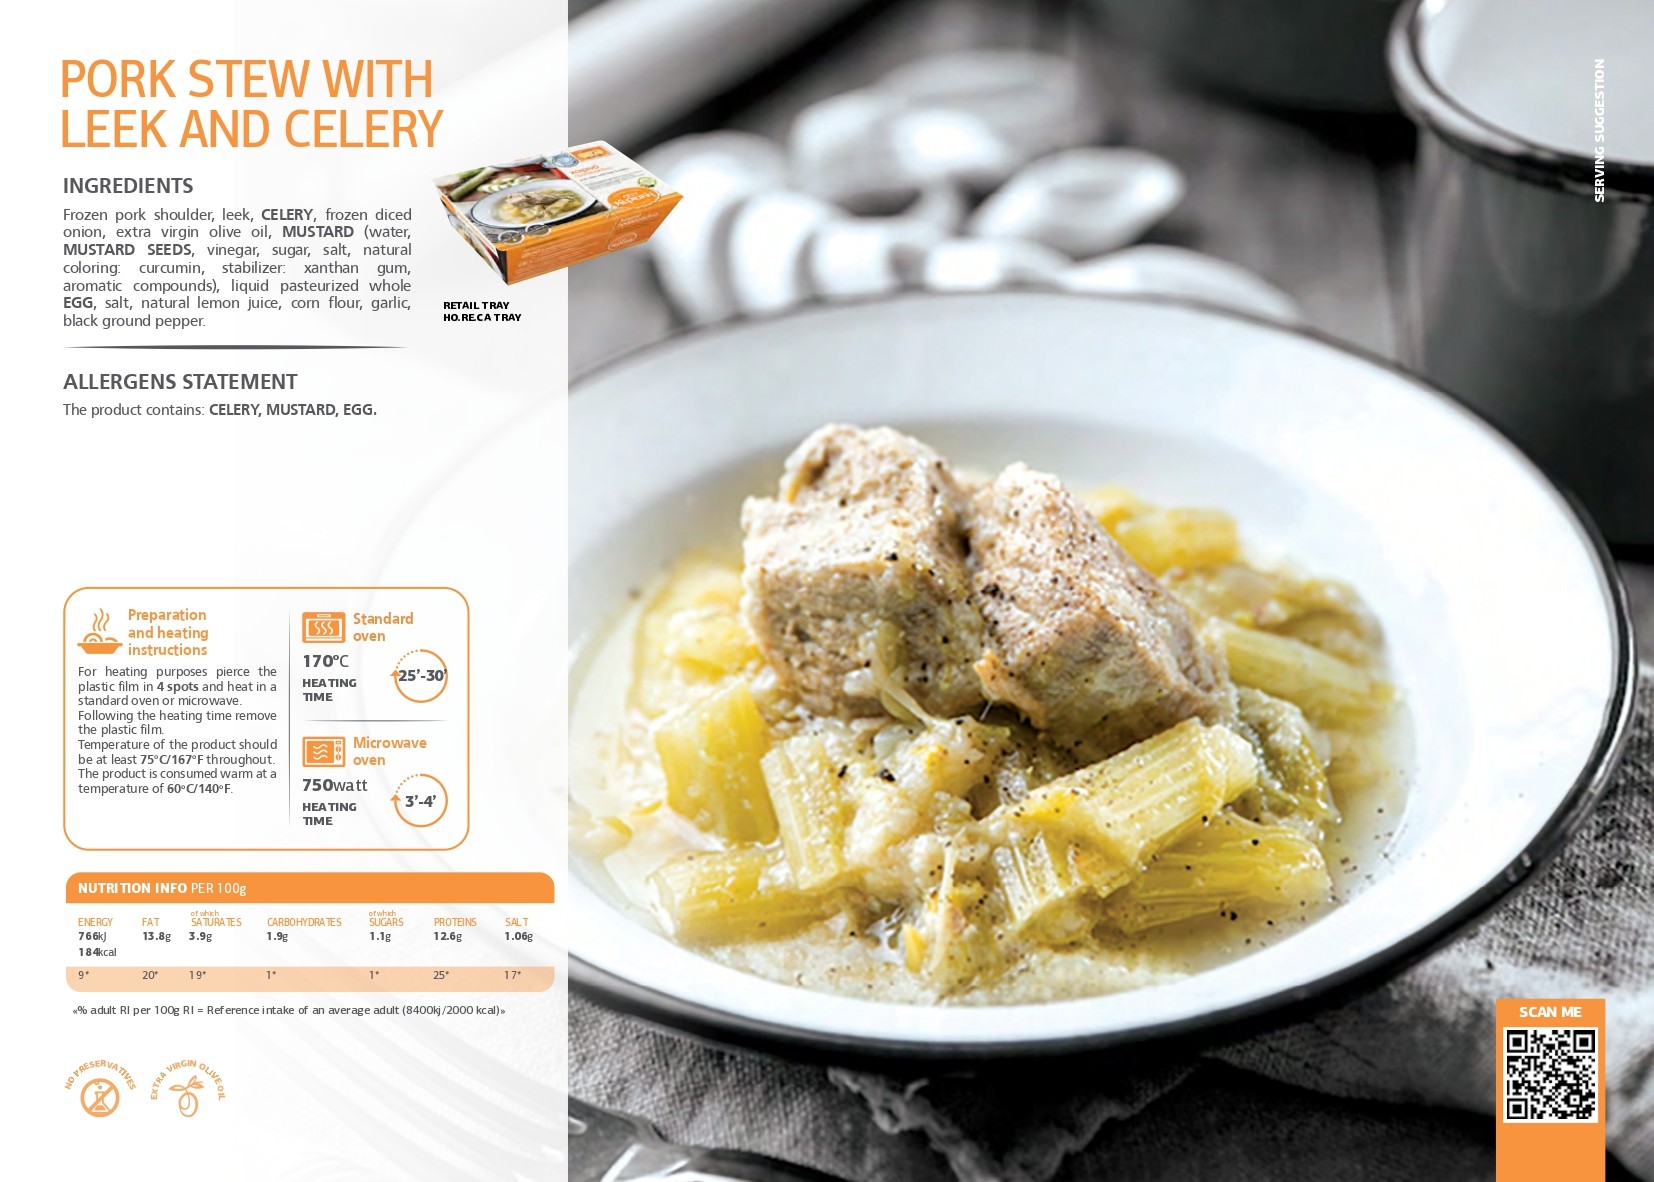 SK - Pork stew with leek and celery pdf image